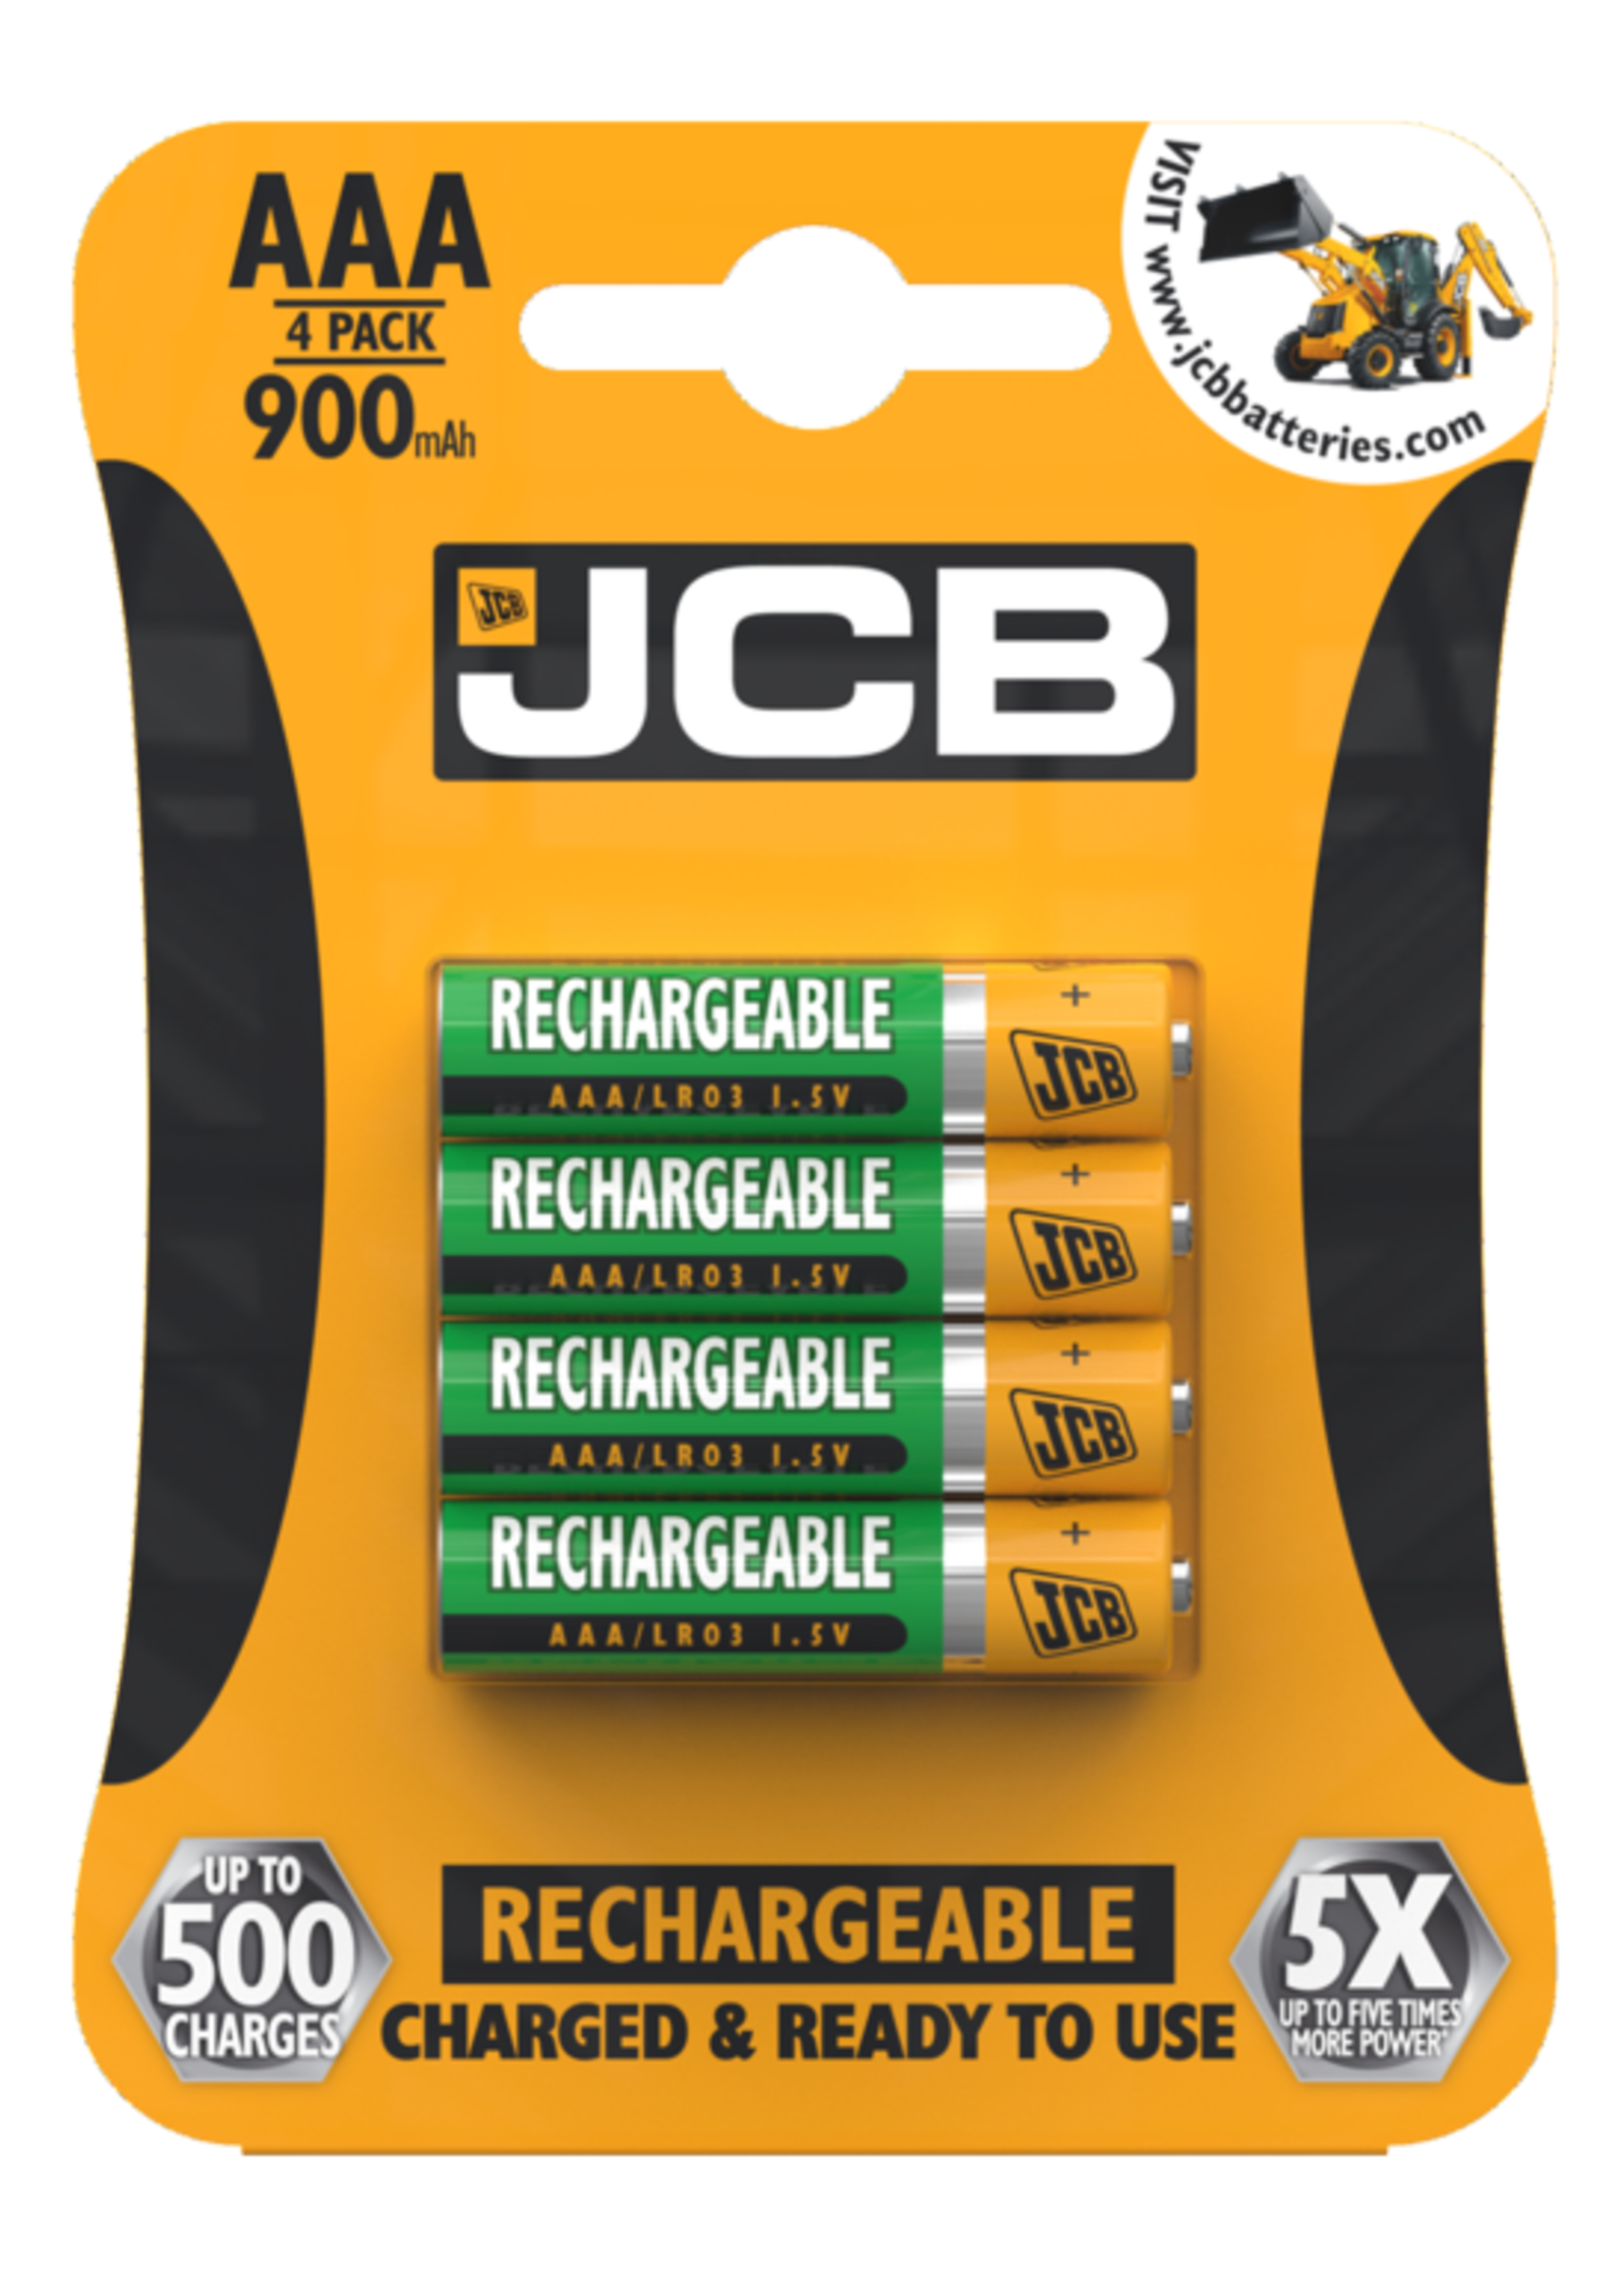 JCB JCB Rechargeable AAA Batteries 900mAh 4 Pack